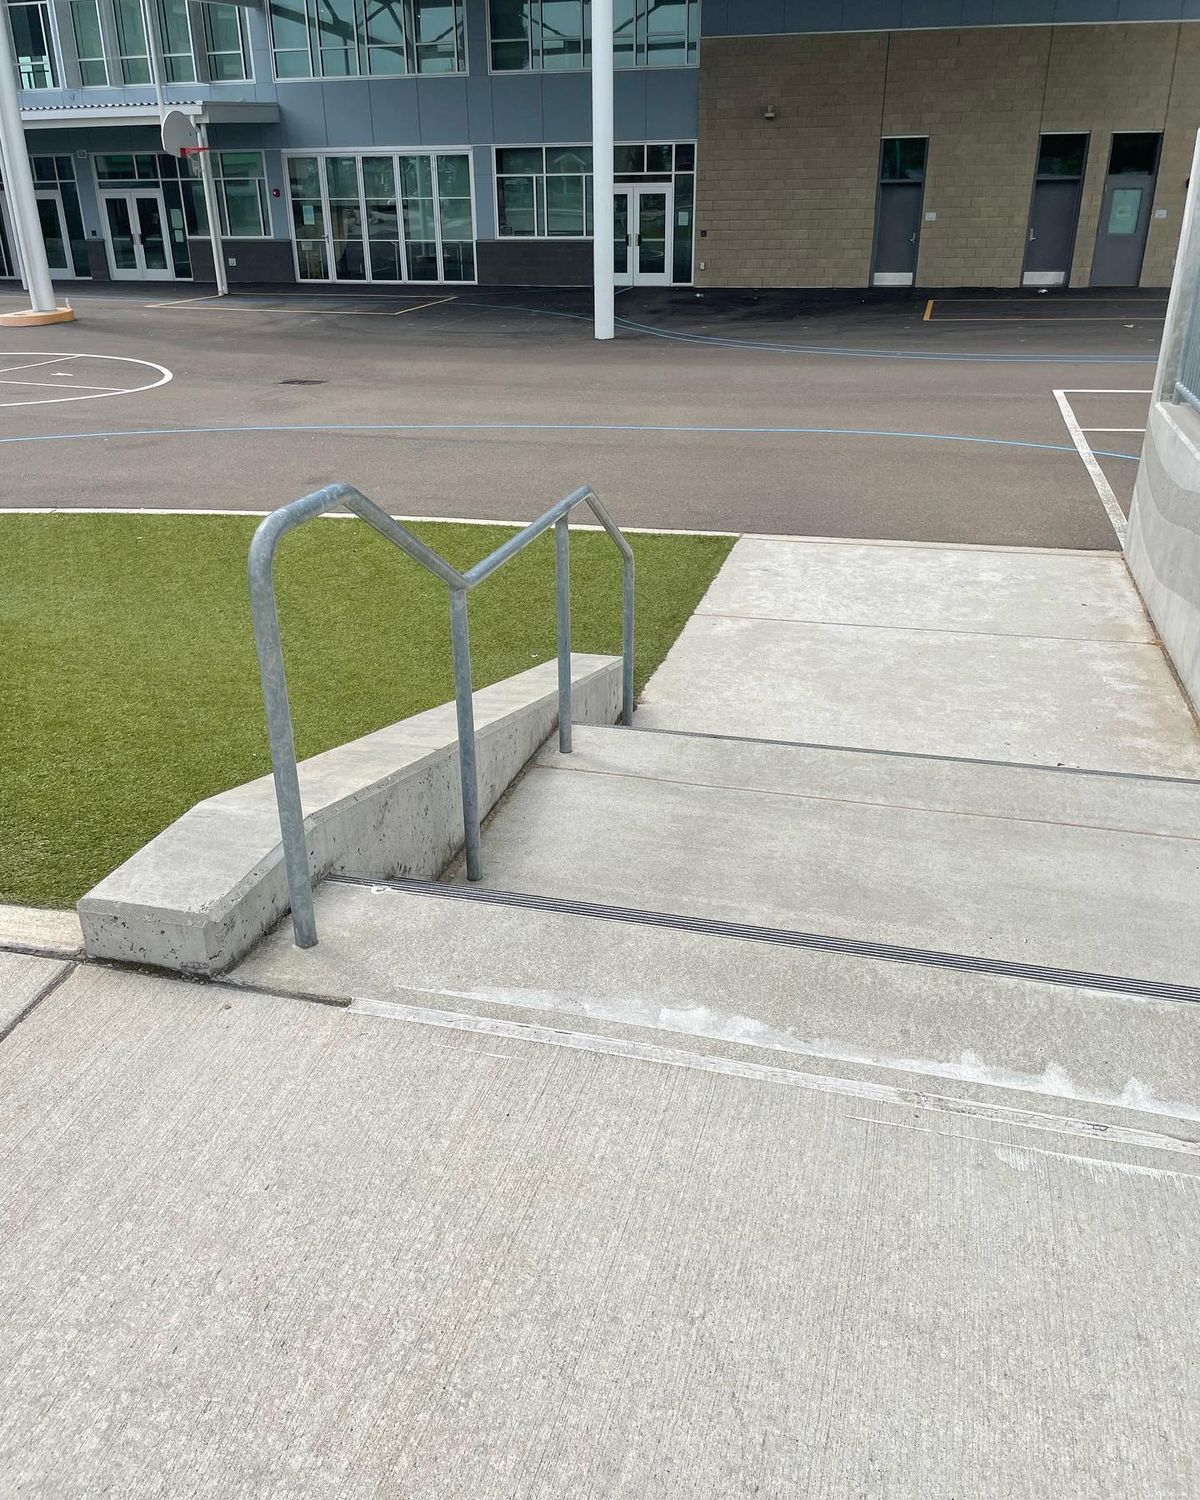 Image for skate spot Mary Lyon Elementary School - 2 Flat 2 Double Set Rail